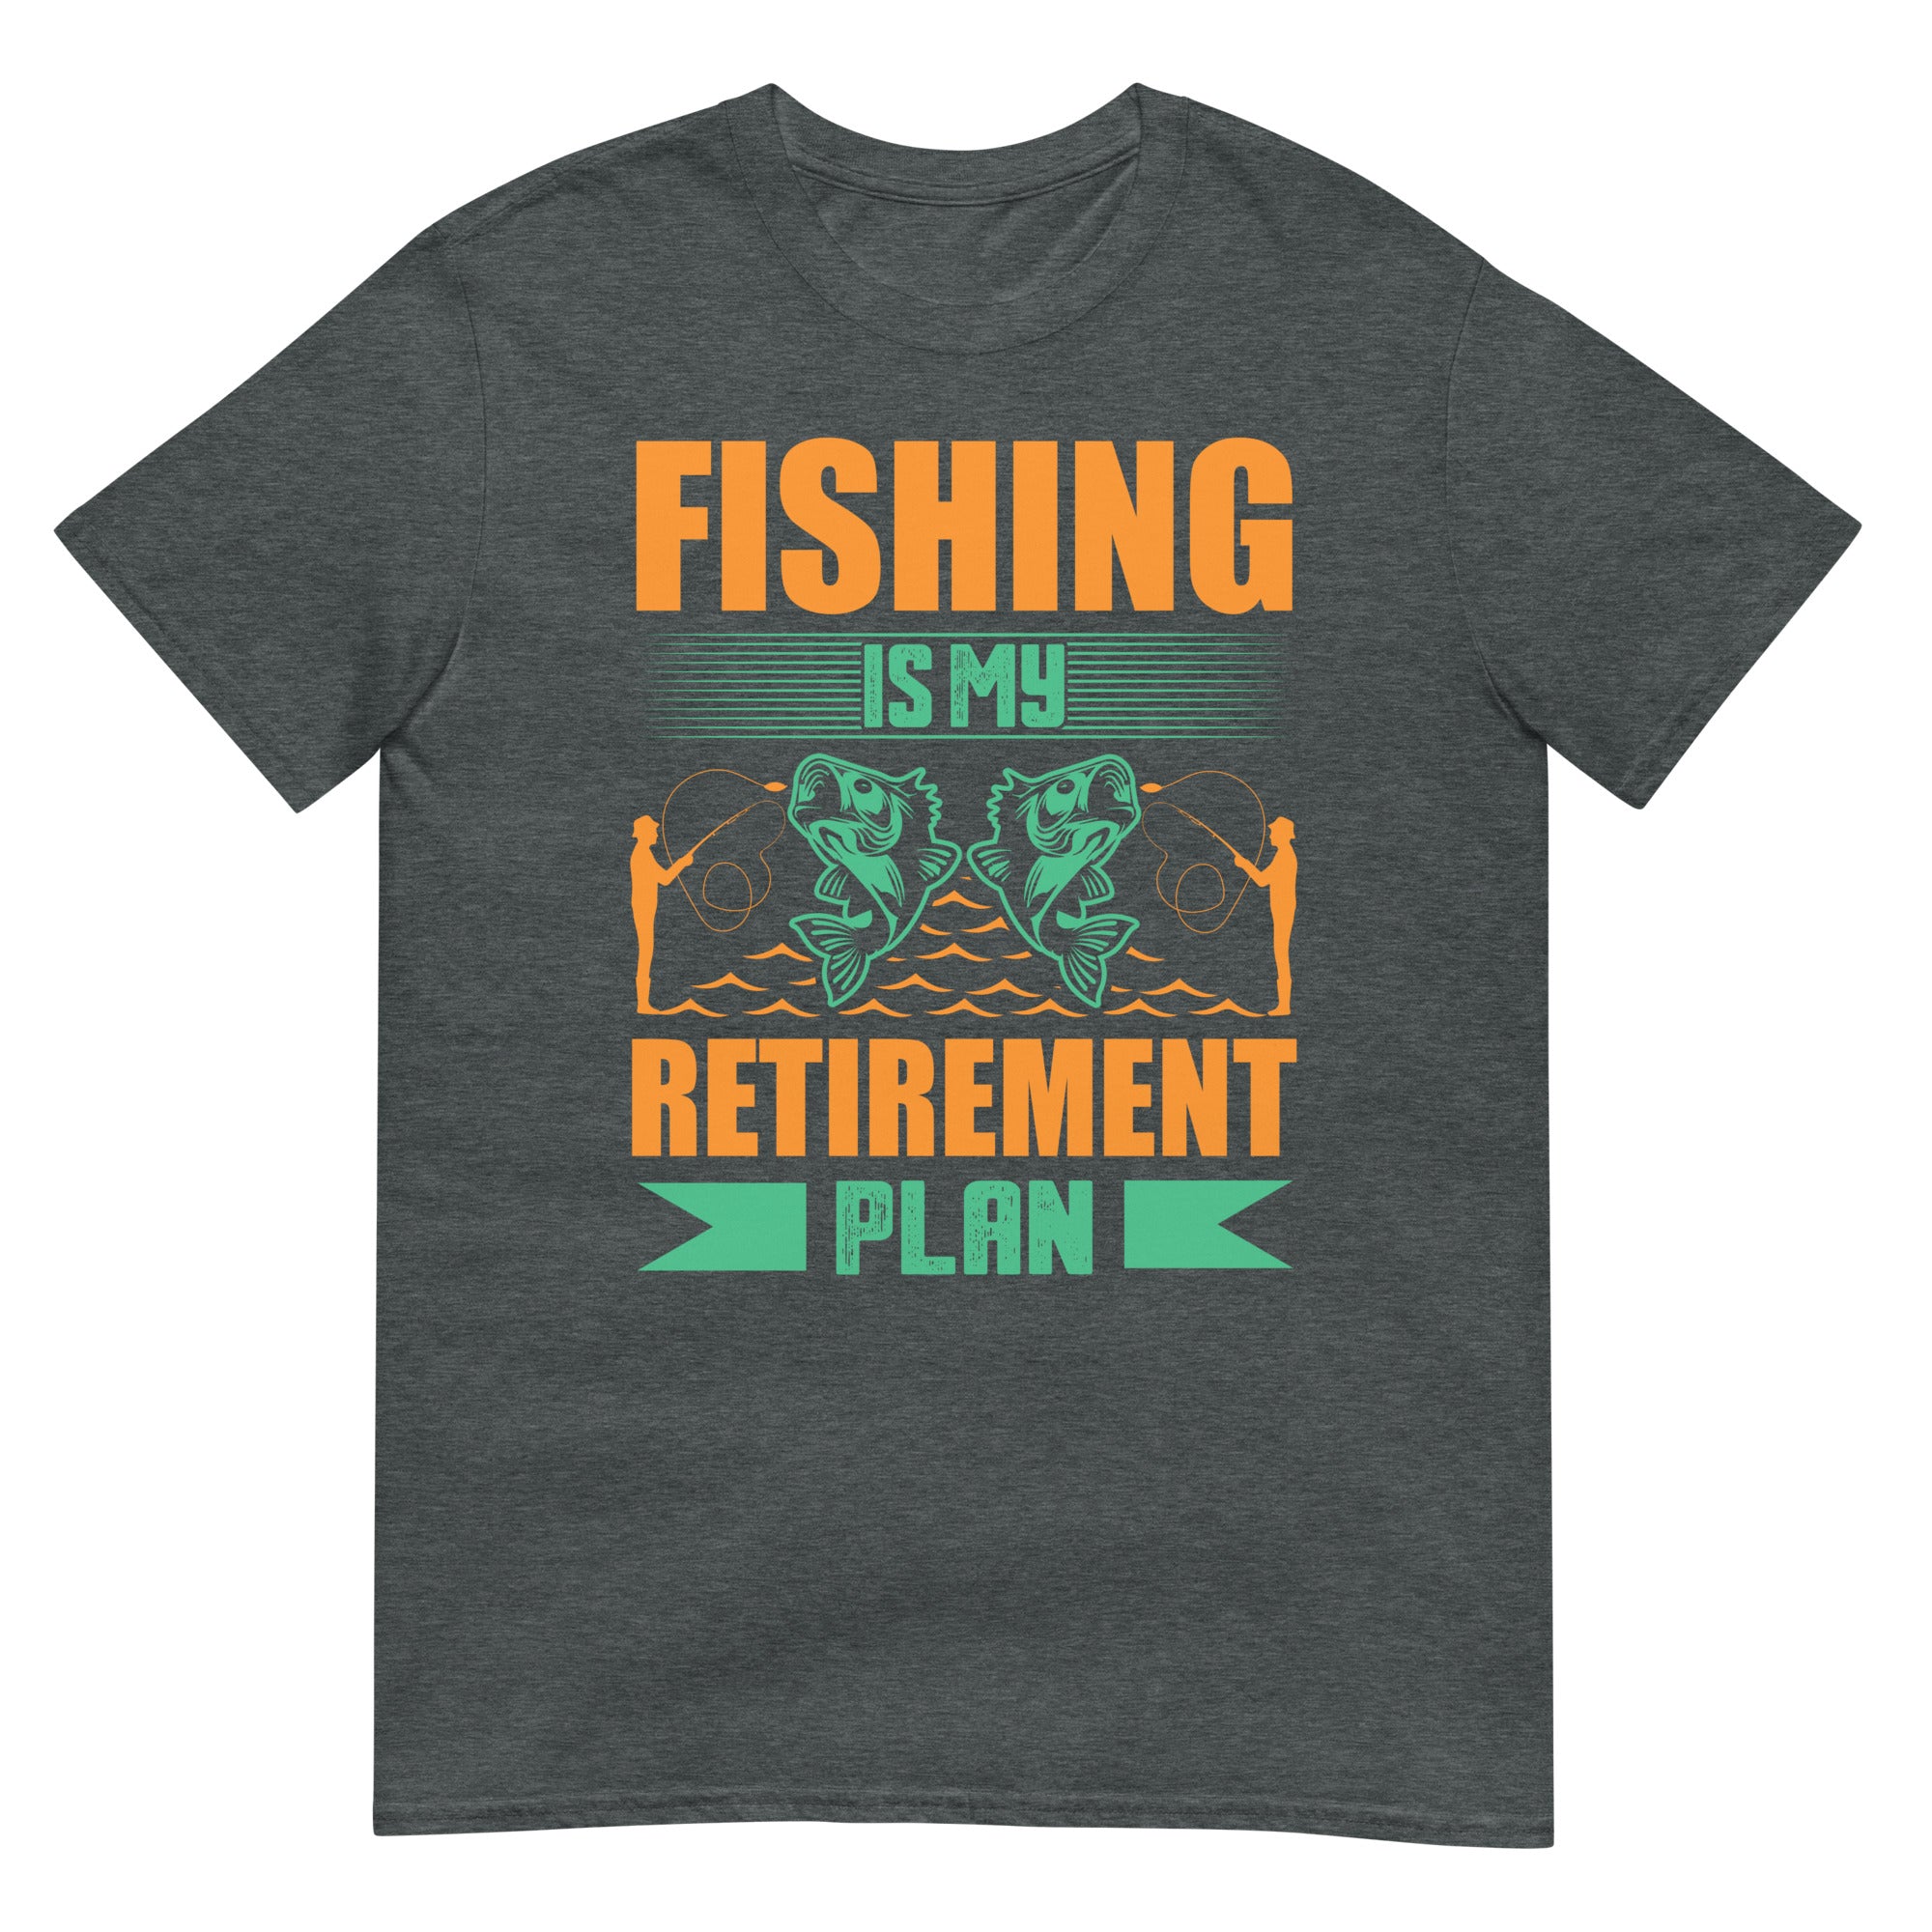 Fishing is my retirement plan Short-Sleeve Unisex T-Shirt